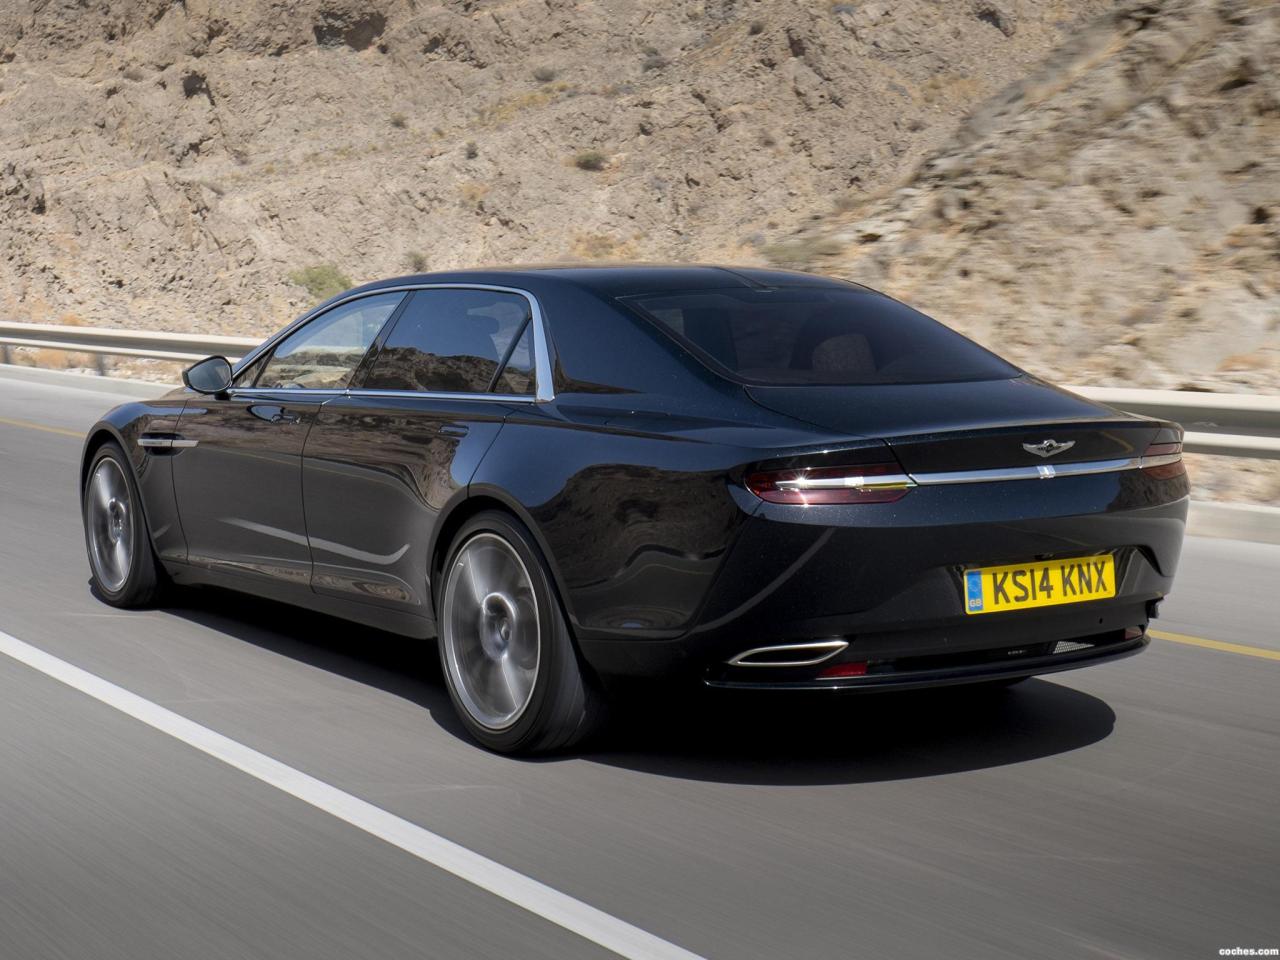 The Future Of Luxury: Introducing The 2014 Aston Martin Lagonda Prototype